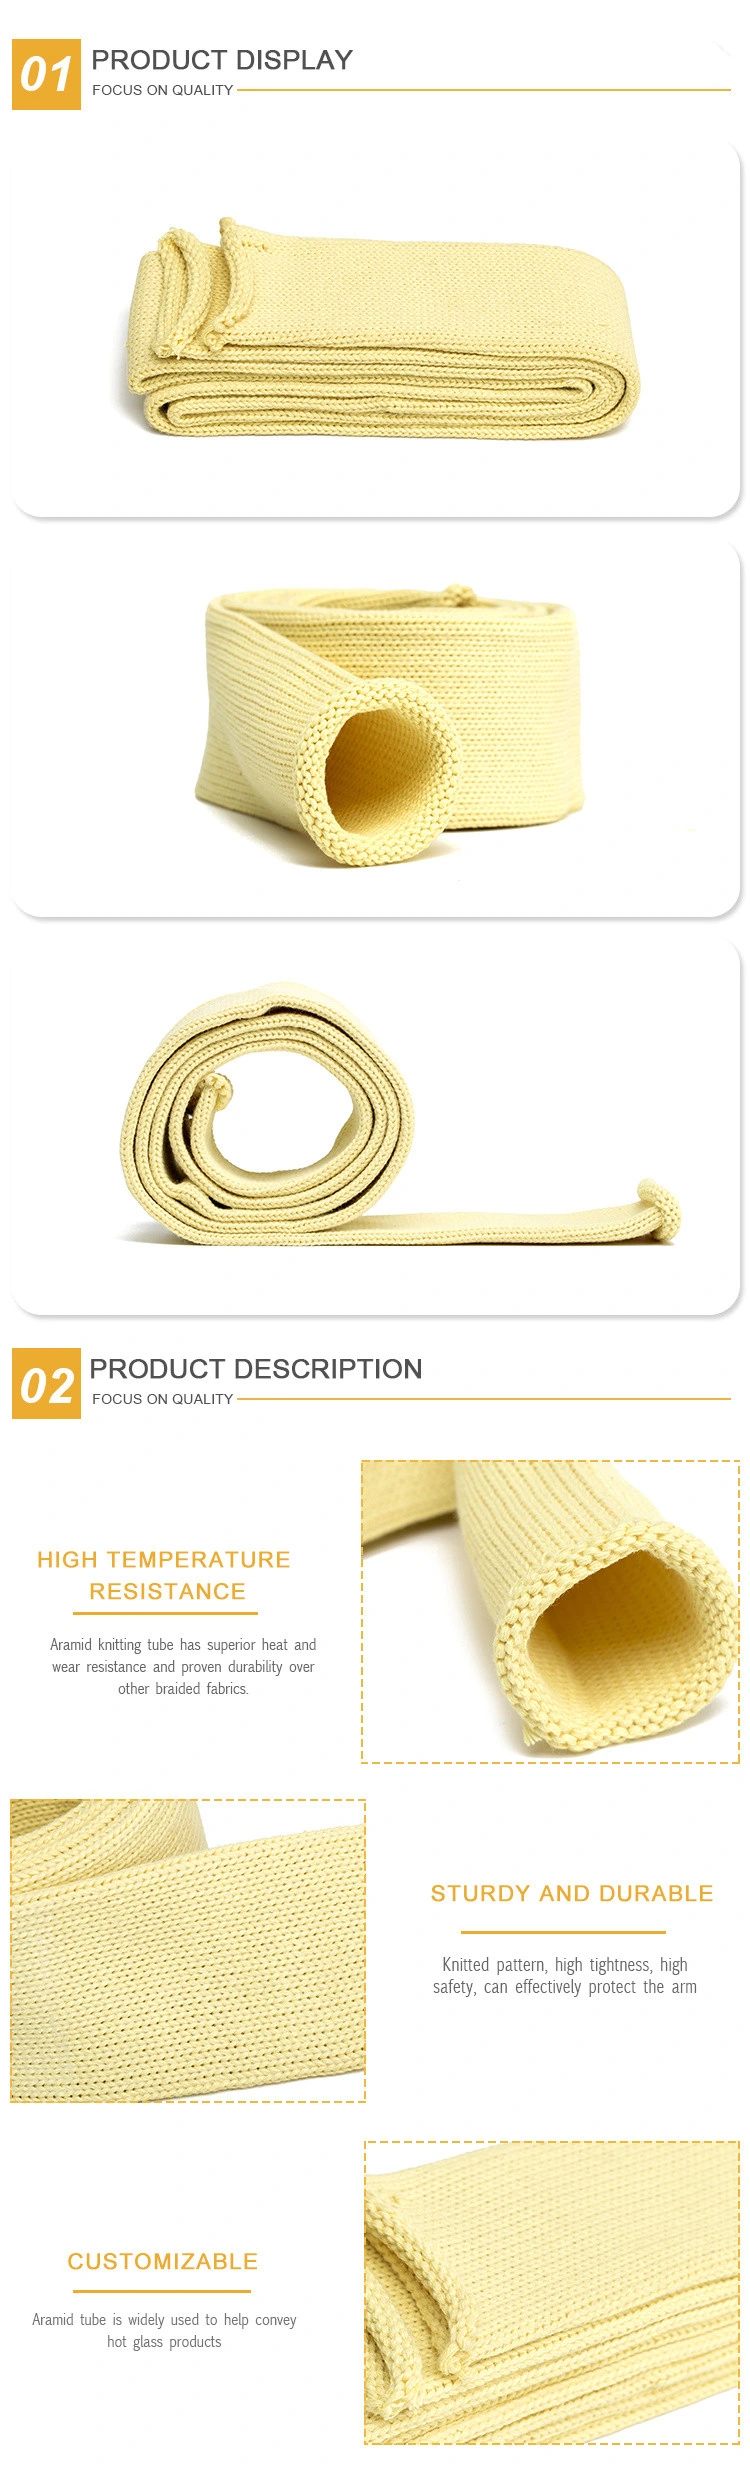 China Factory Big Good Arm Cut Cutting Resistant Kevlar Anti Cut Sleeve K18 Kevlar Aramid Sleeve with Factory Price